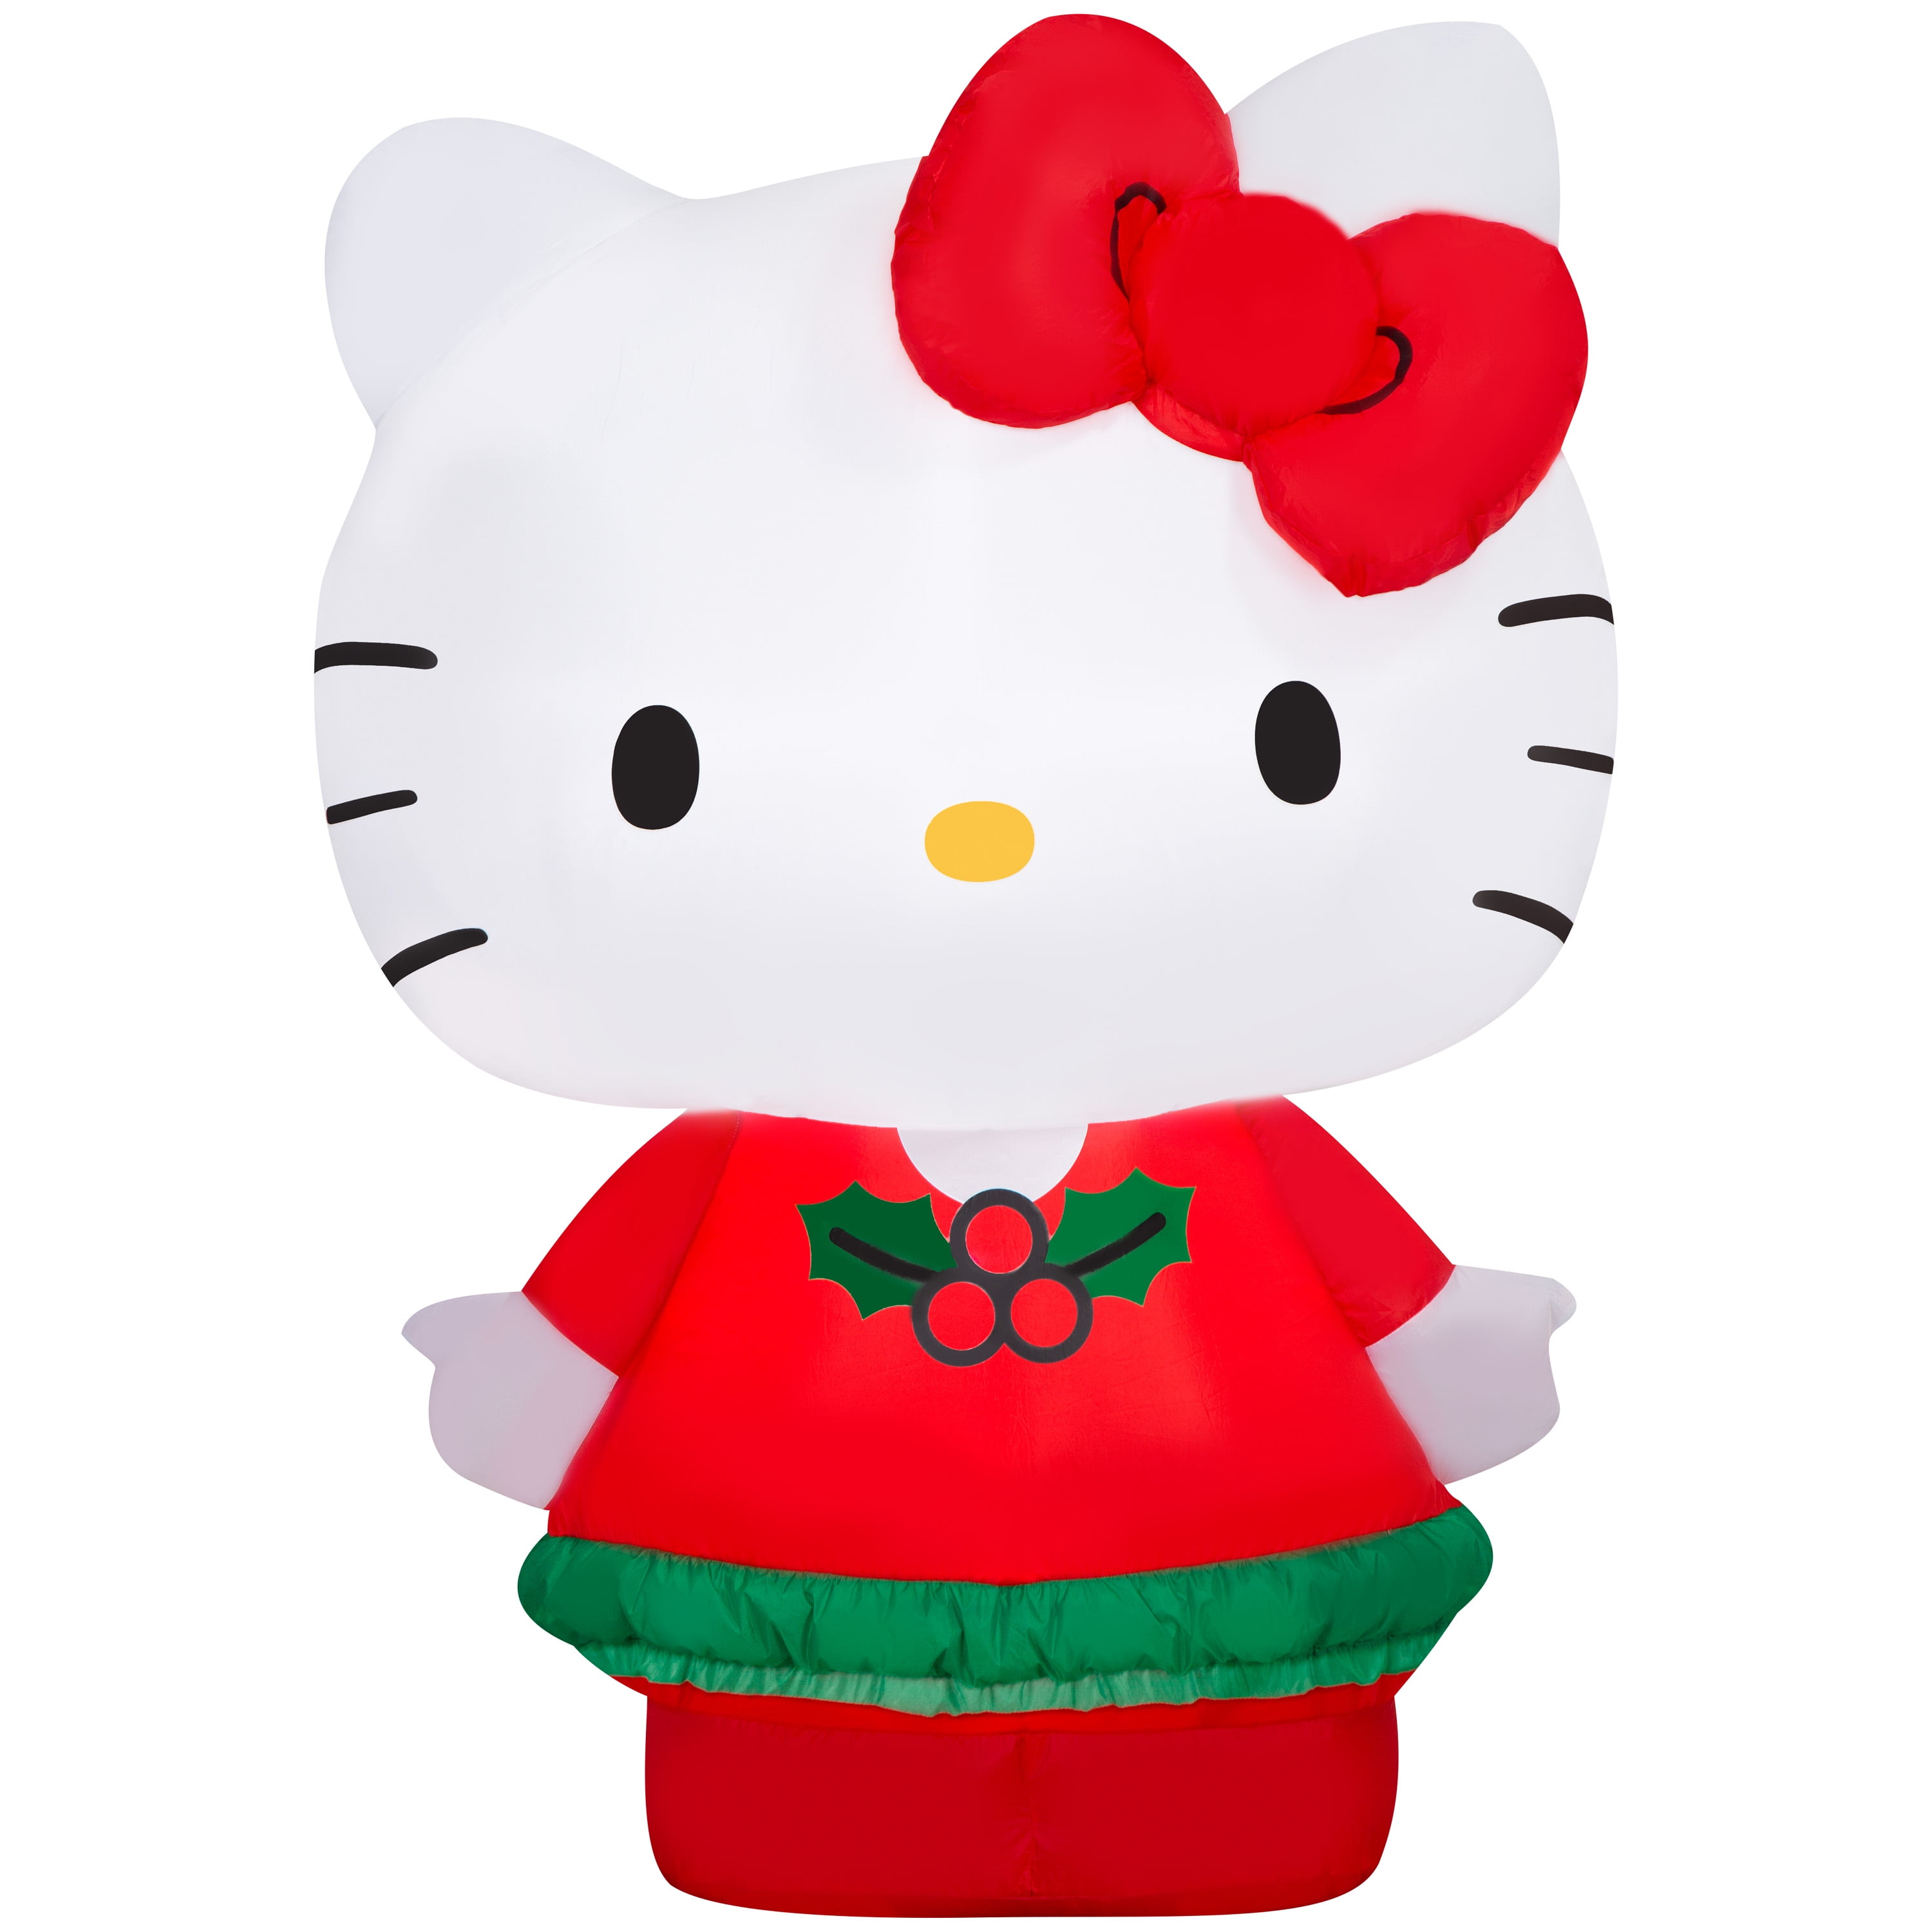 Airblown-Inflatables-Christmas-Hello-Kitty-with-Red-Dress-Sanrio_4f6dd6f9-db21-454f-b35e-90e4149e1e14.5f9d8ce498e5199fadb916da3ba2136d.jpeg